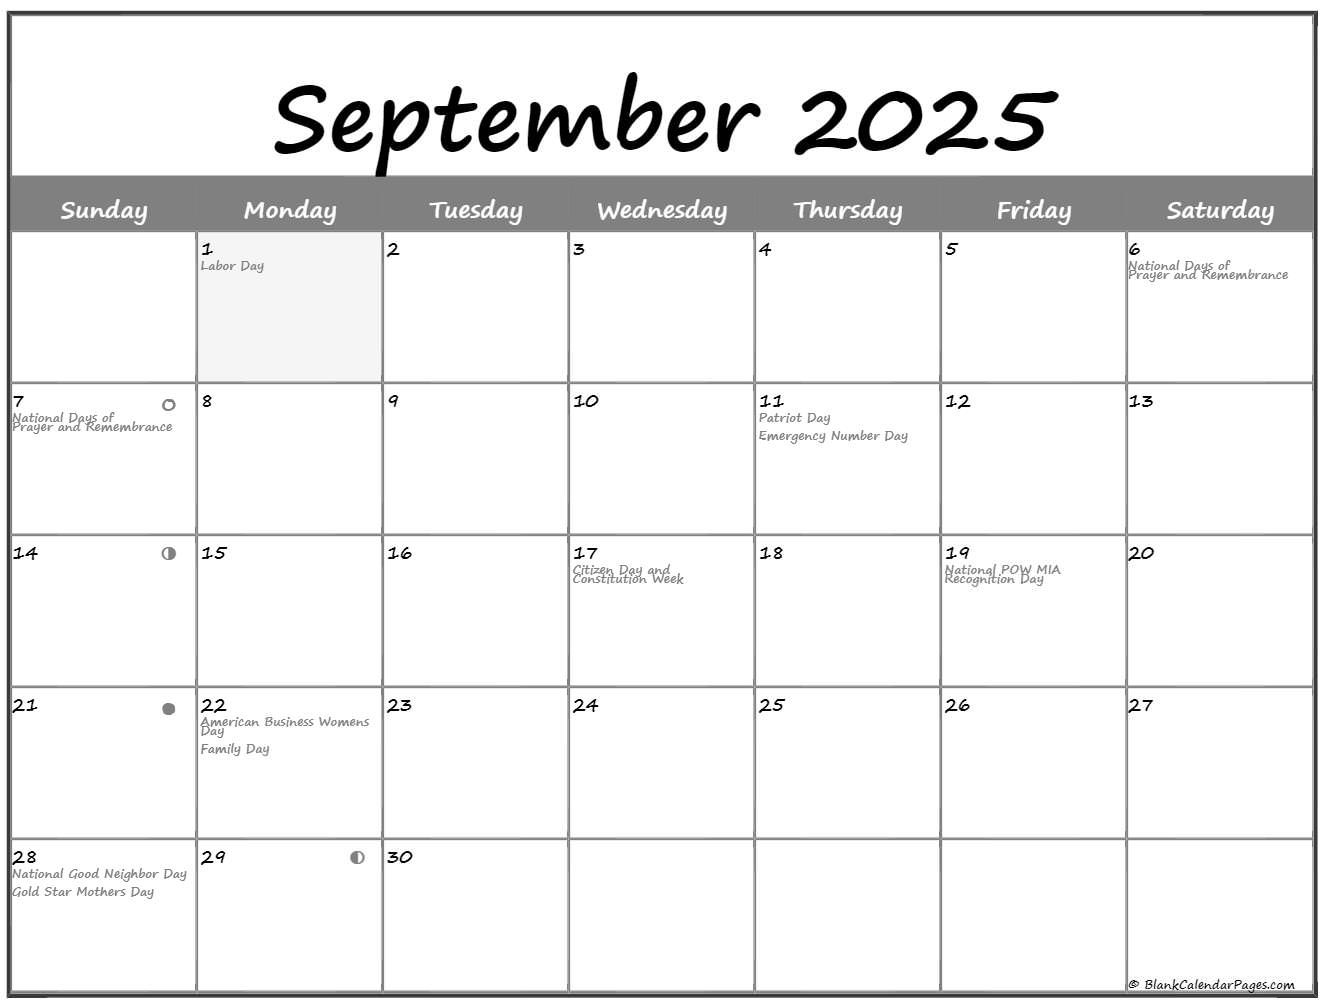 September 2025 Lunar Calendar Moon Phase Calendar